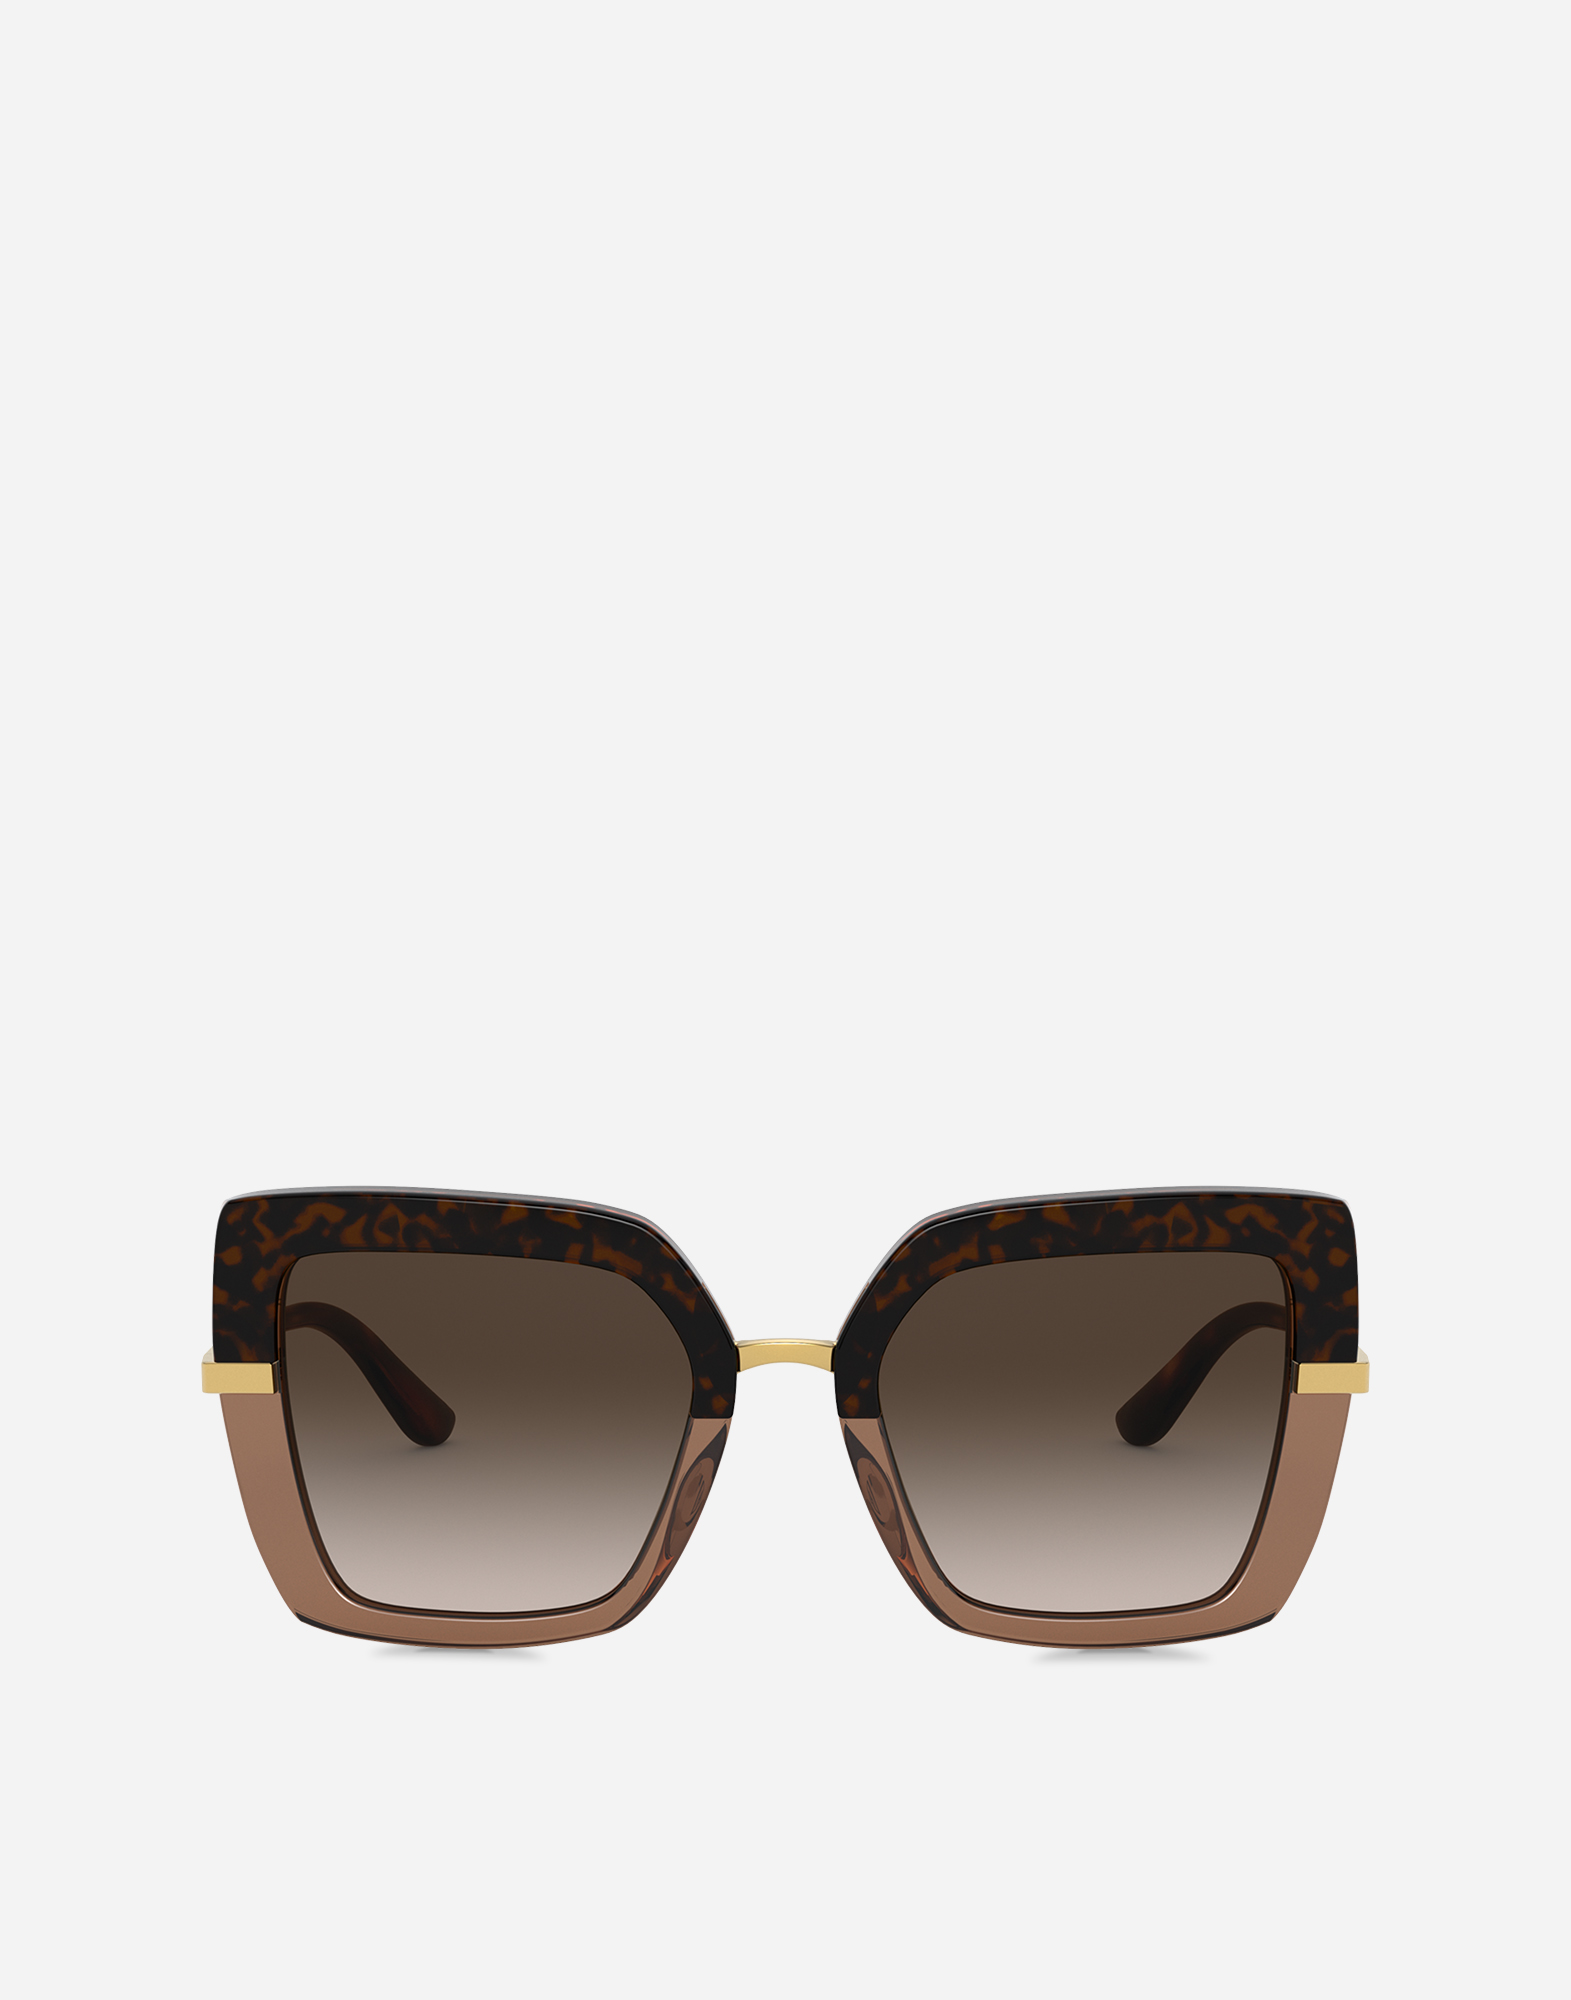 dolce and gabbana sunglasses white frame